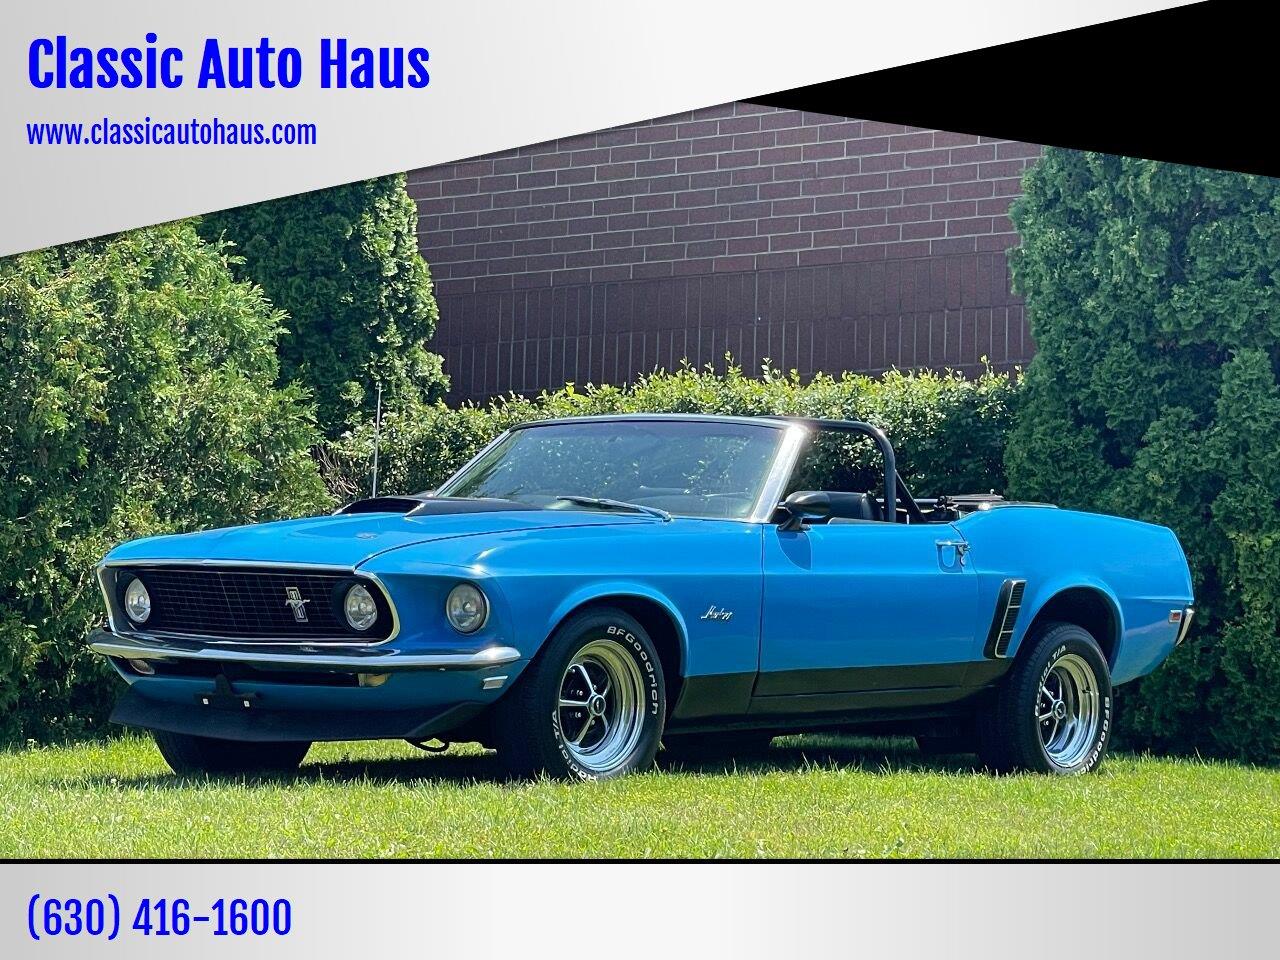 For Sale: 1969 Ford Mustang in Geneva, Illinois for sale in Geneva, IL